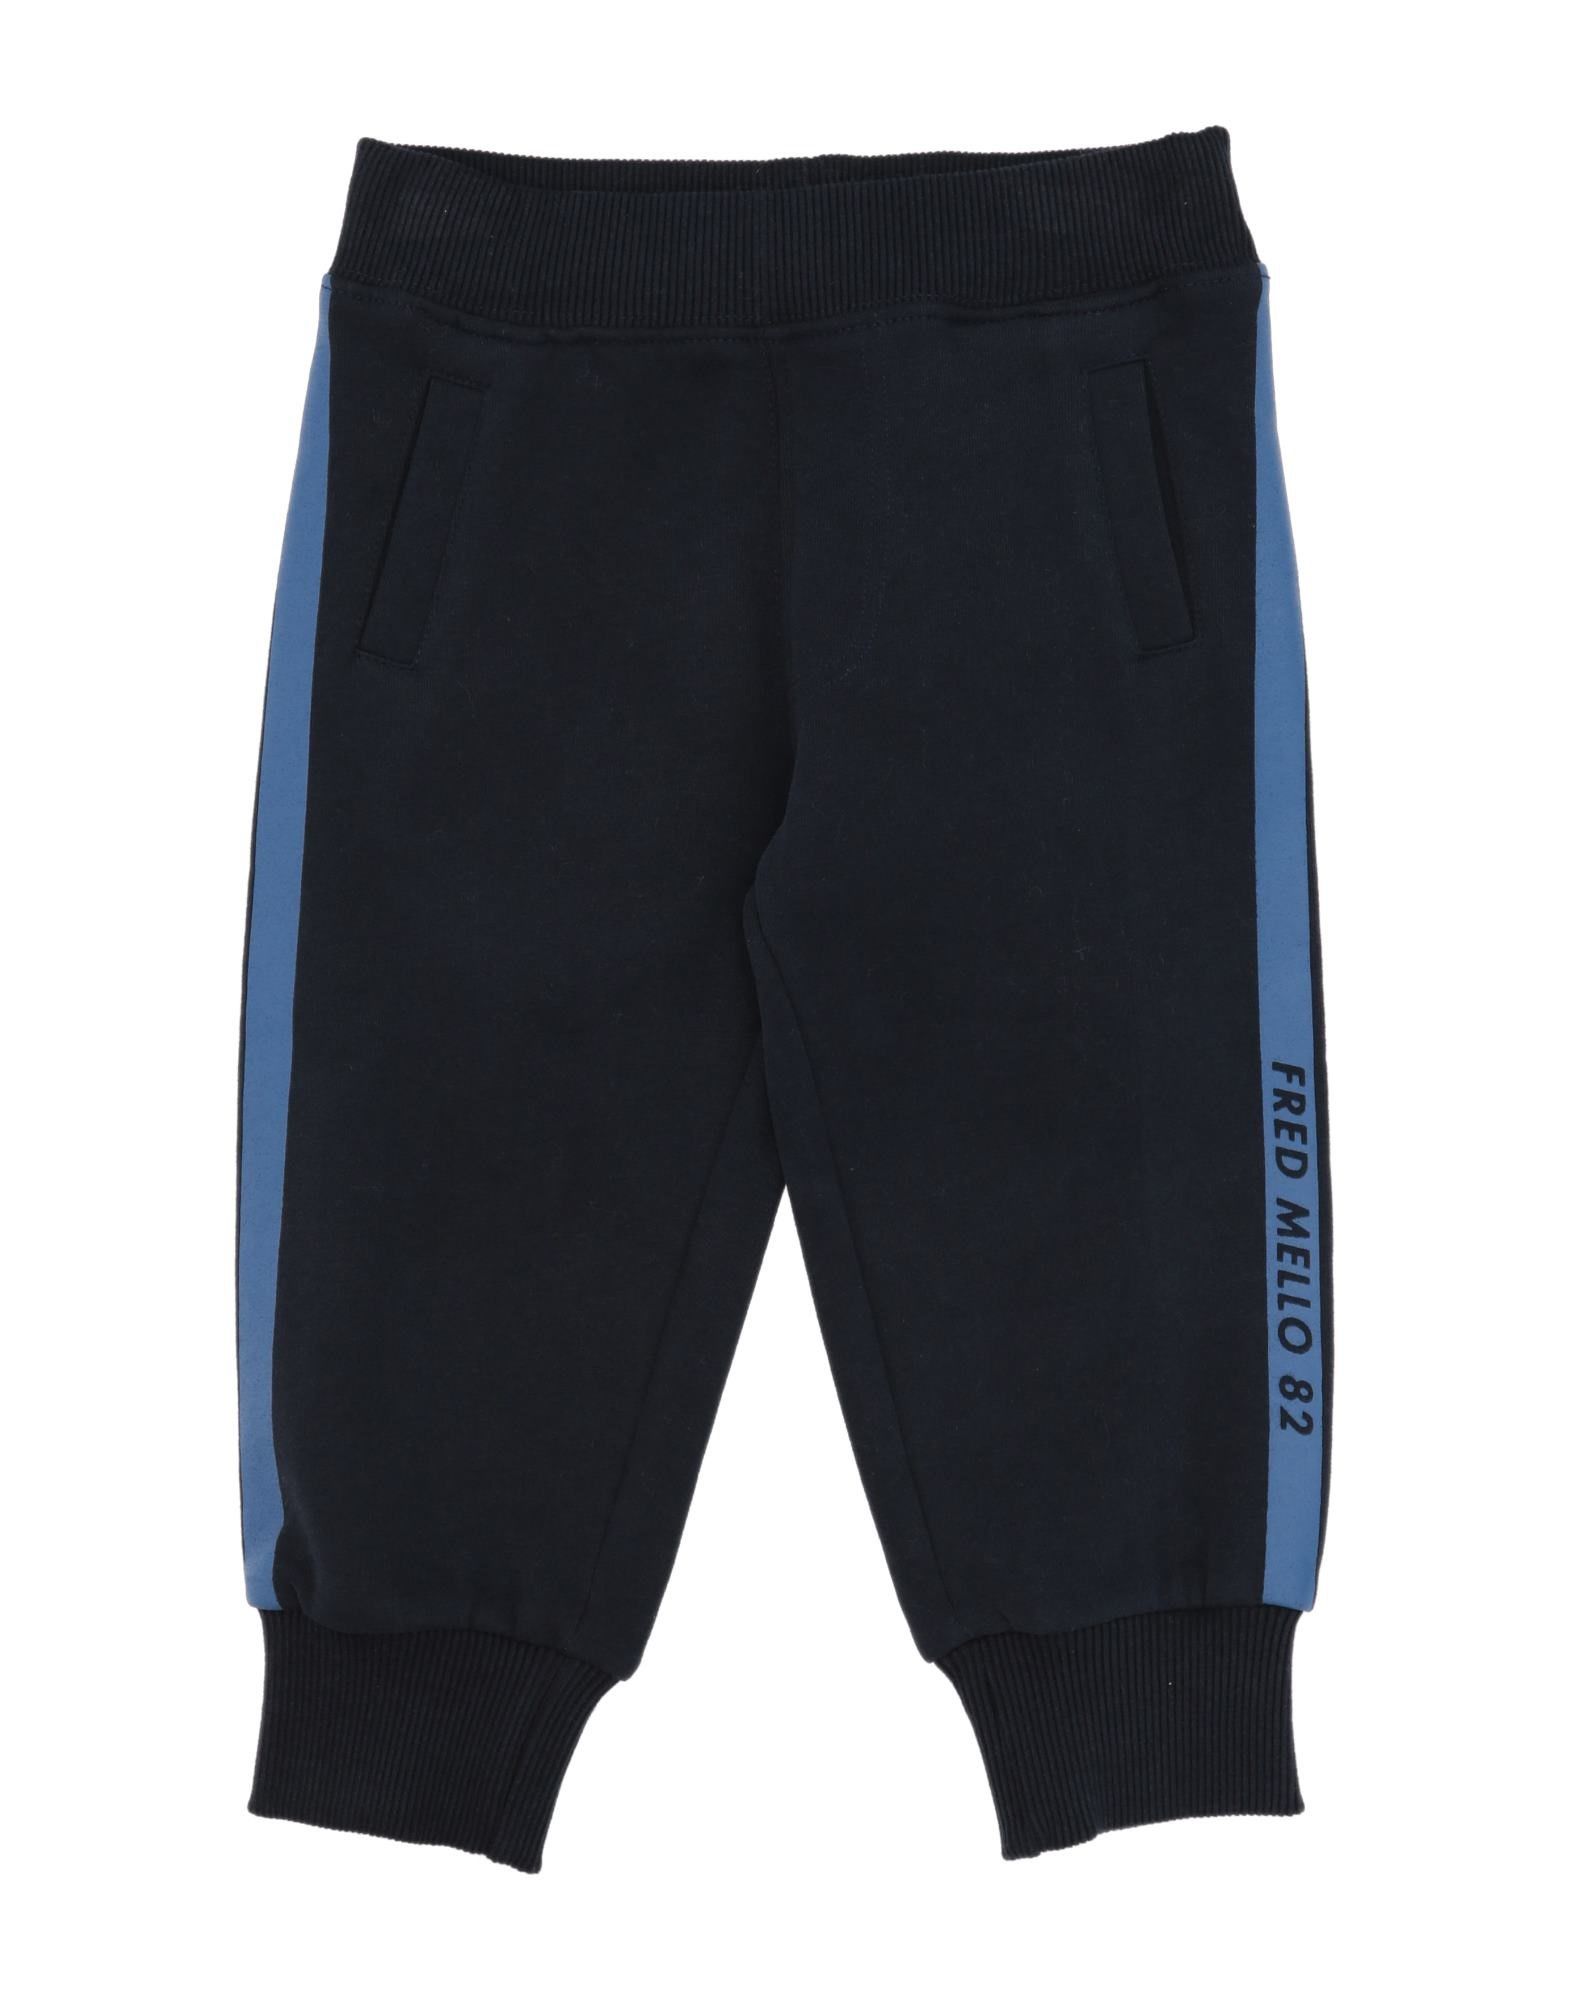 Fred Mello Kids' Pants In Dark Blue